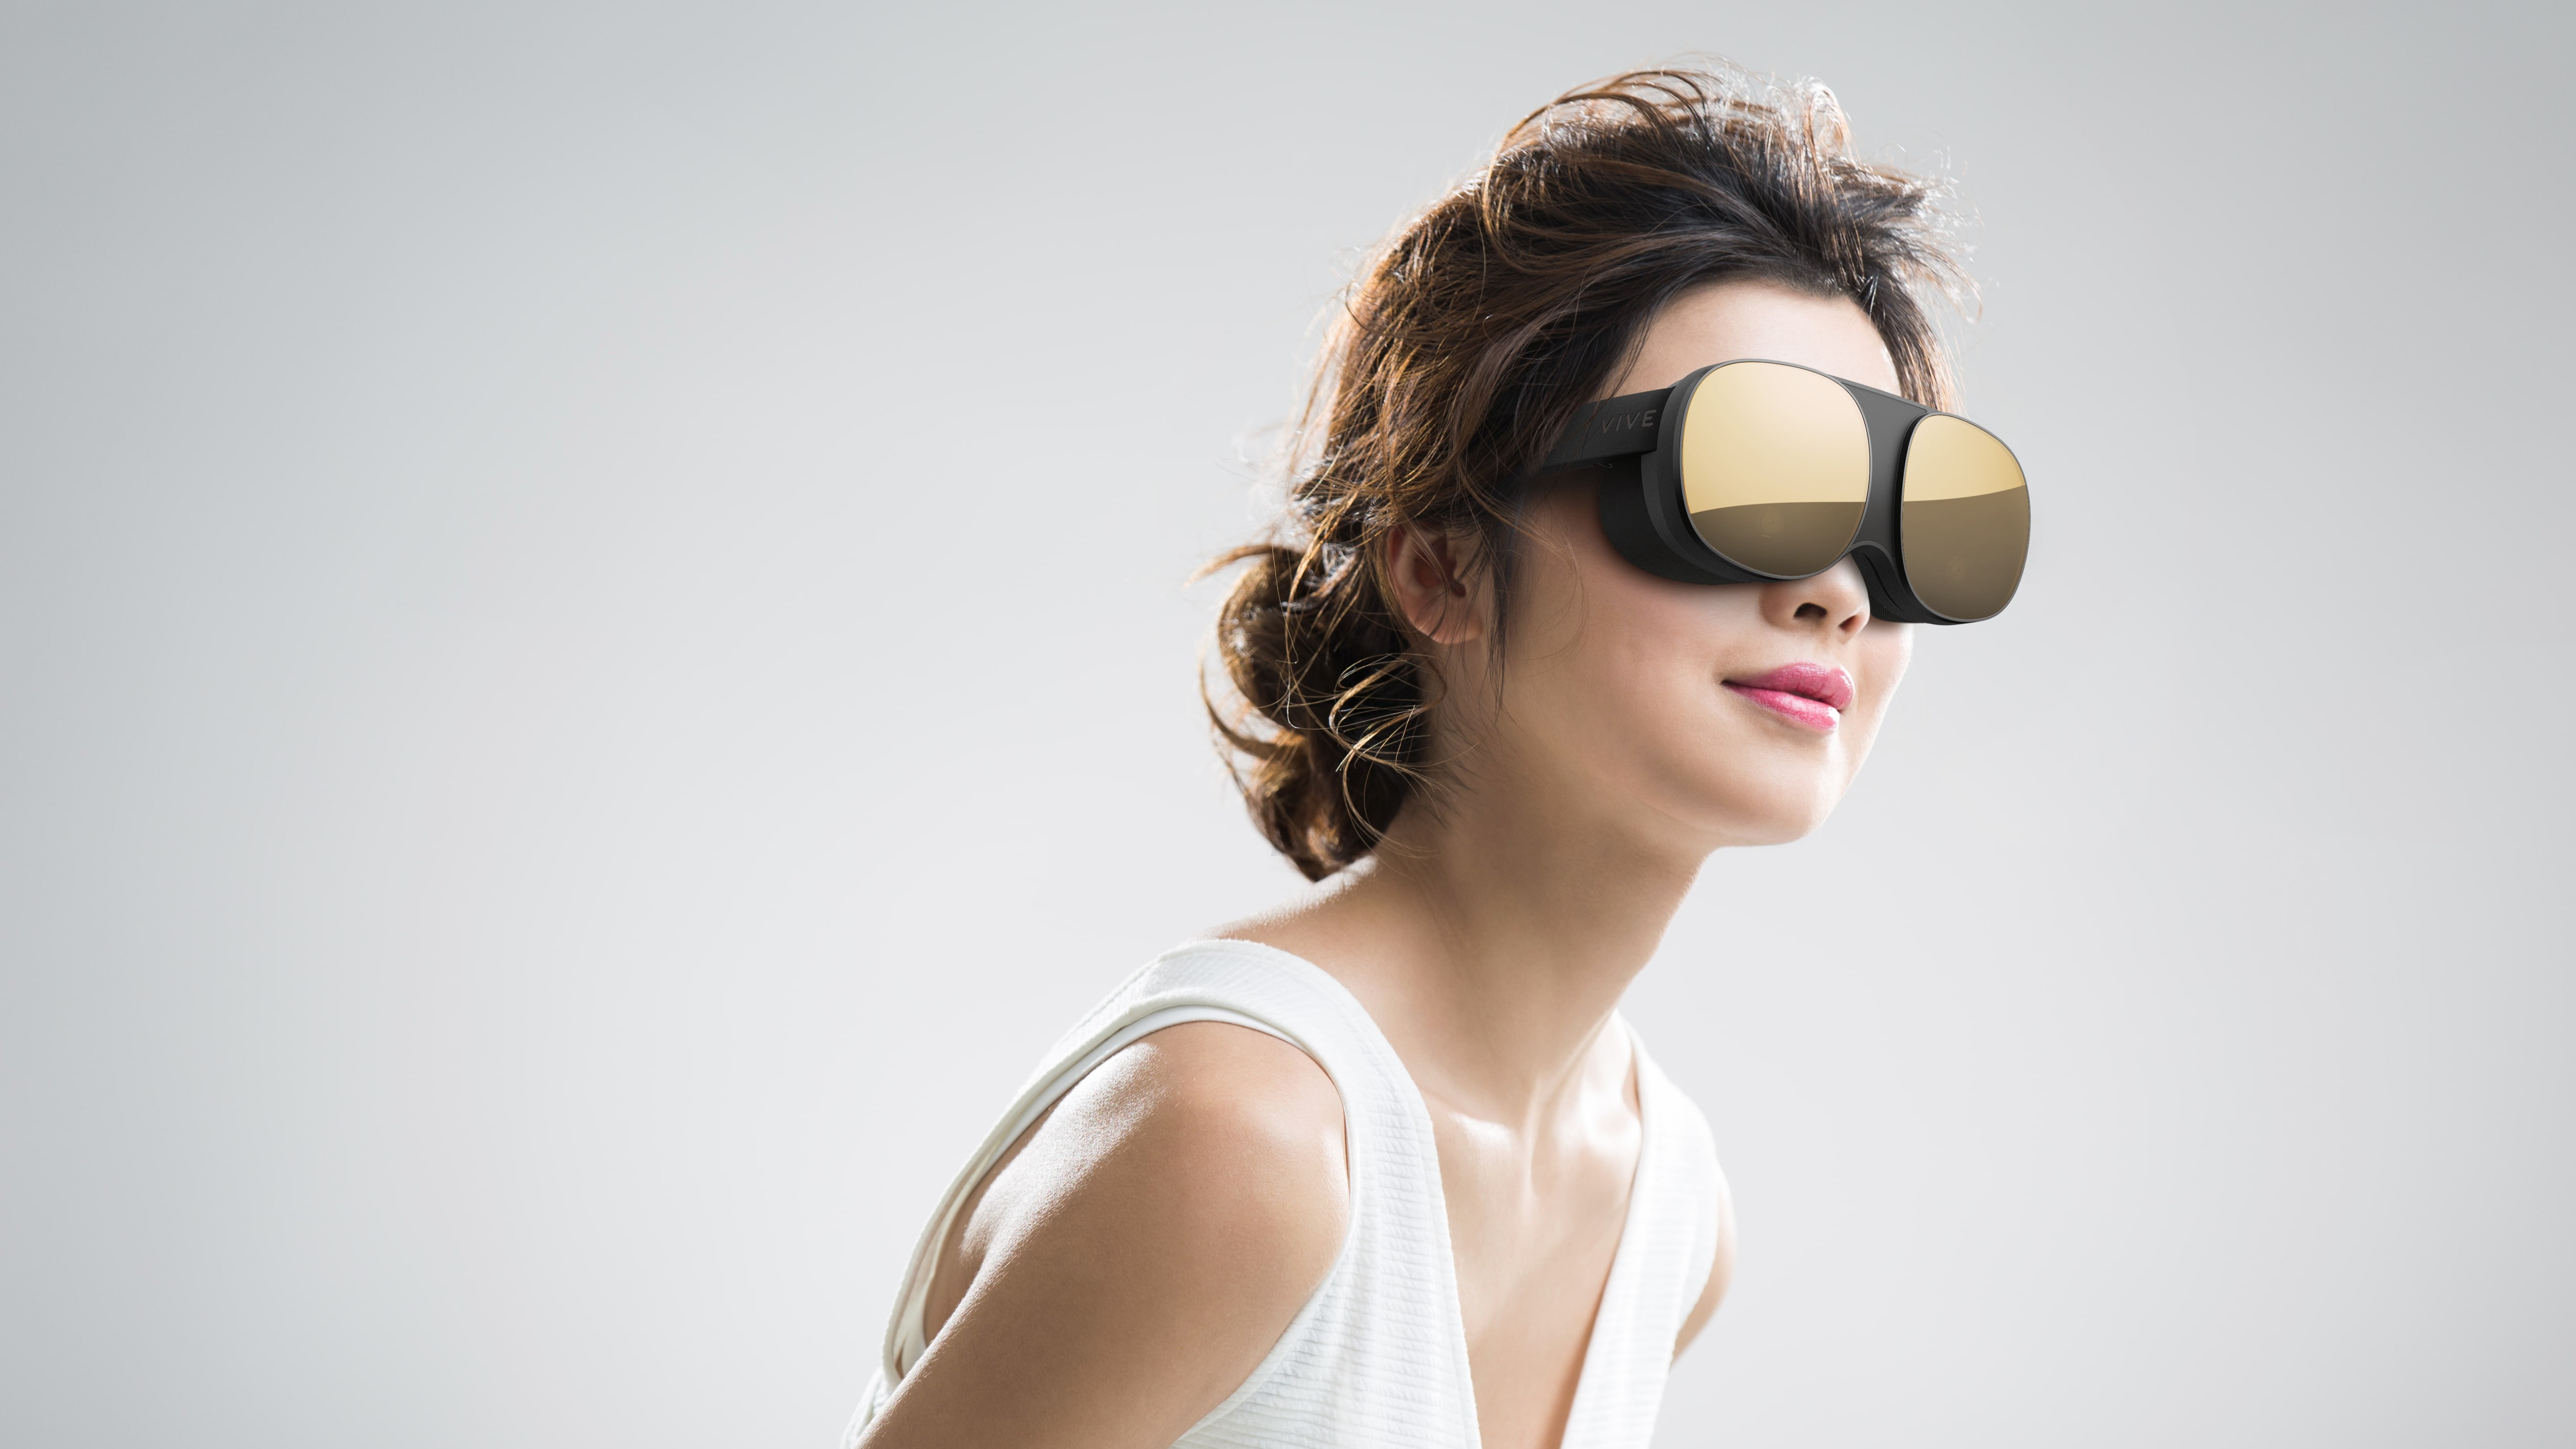 HTC Vive officially unveils its Vive Flow 'immersive eyewear' TechRadar